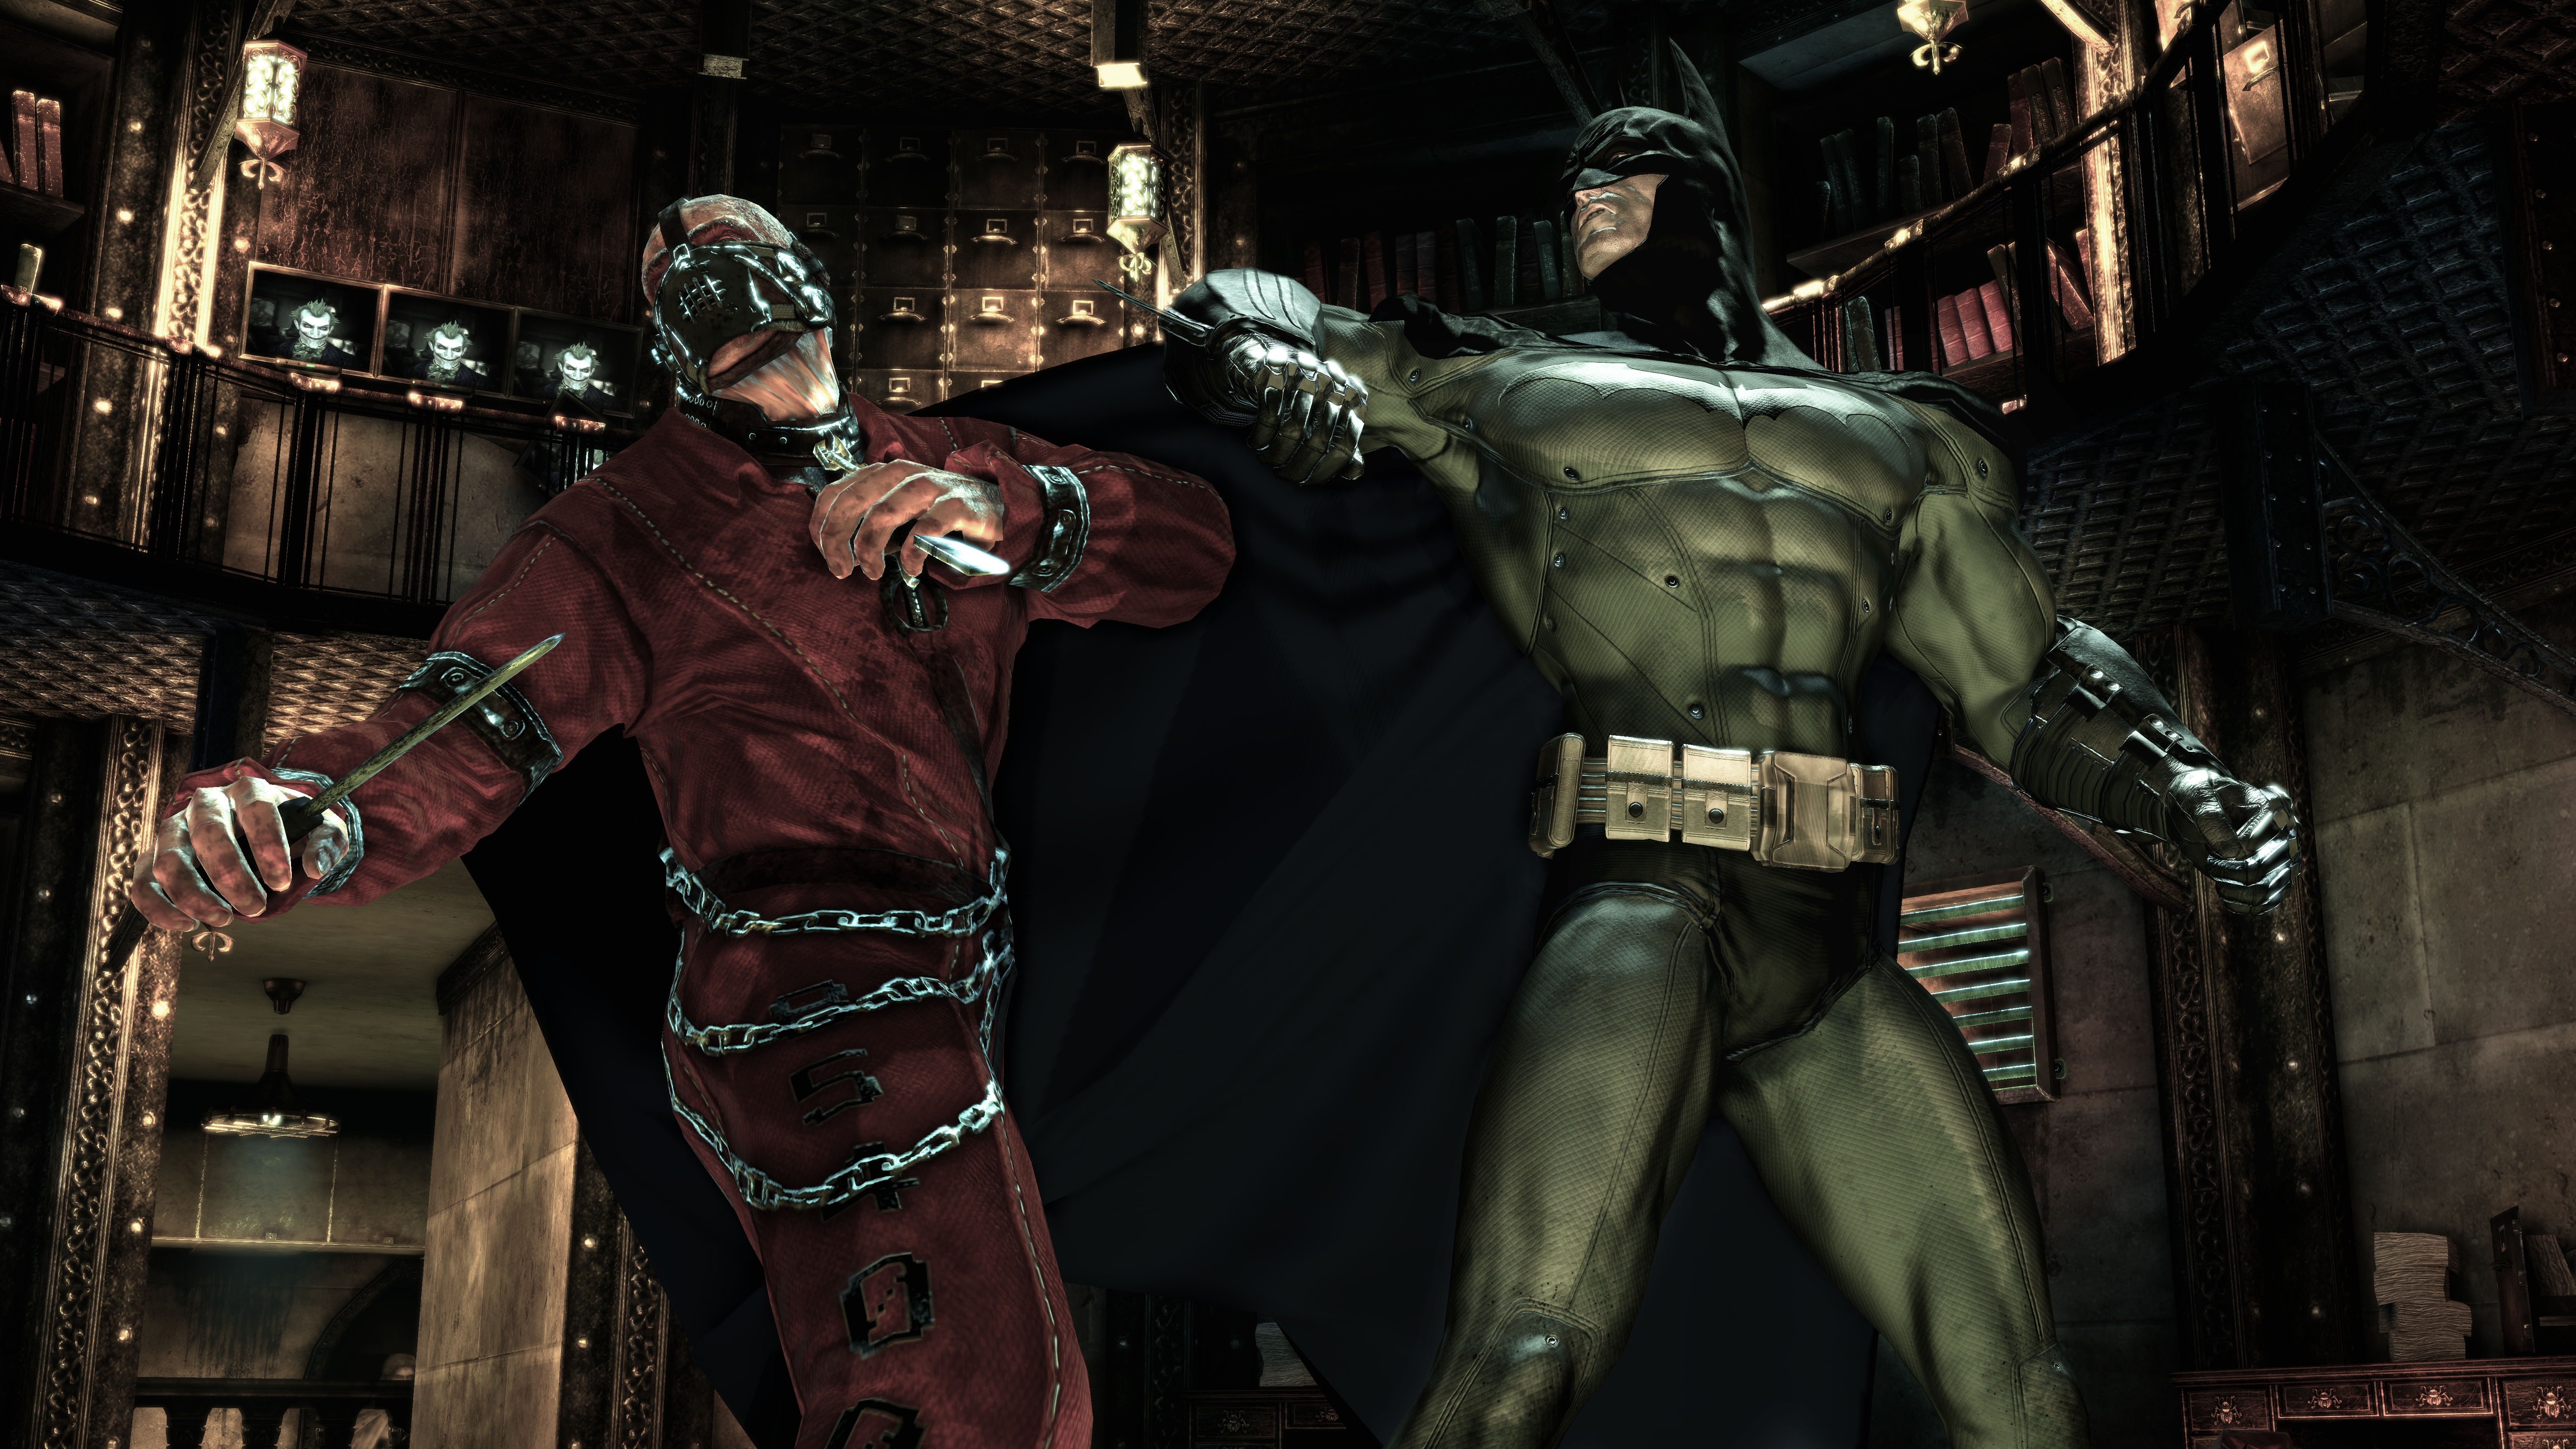 Бэтмен аркхам асайлум. Batman Аркхем асилум. Batman: Arkham Asylum (2009). Бэтмен 2010 игра.